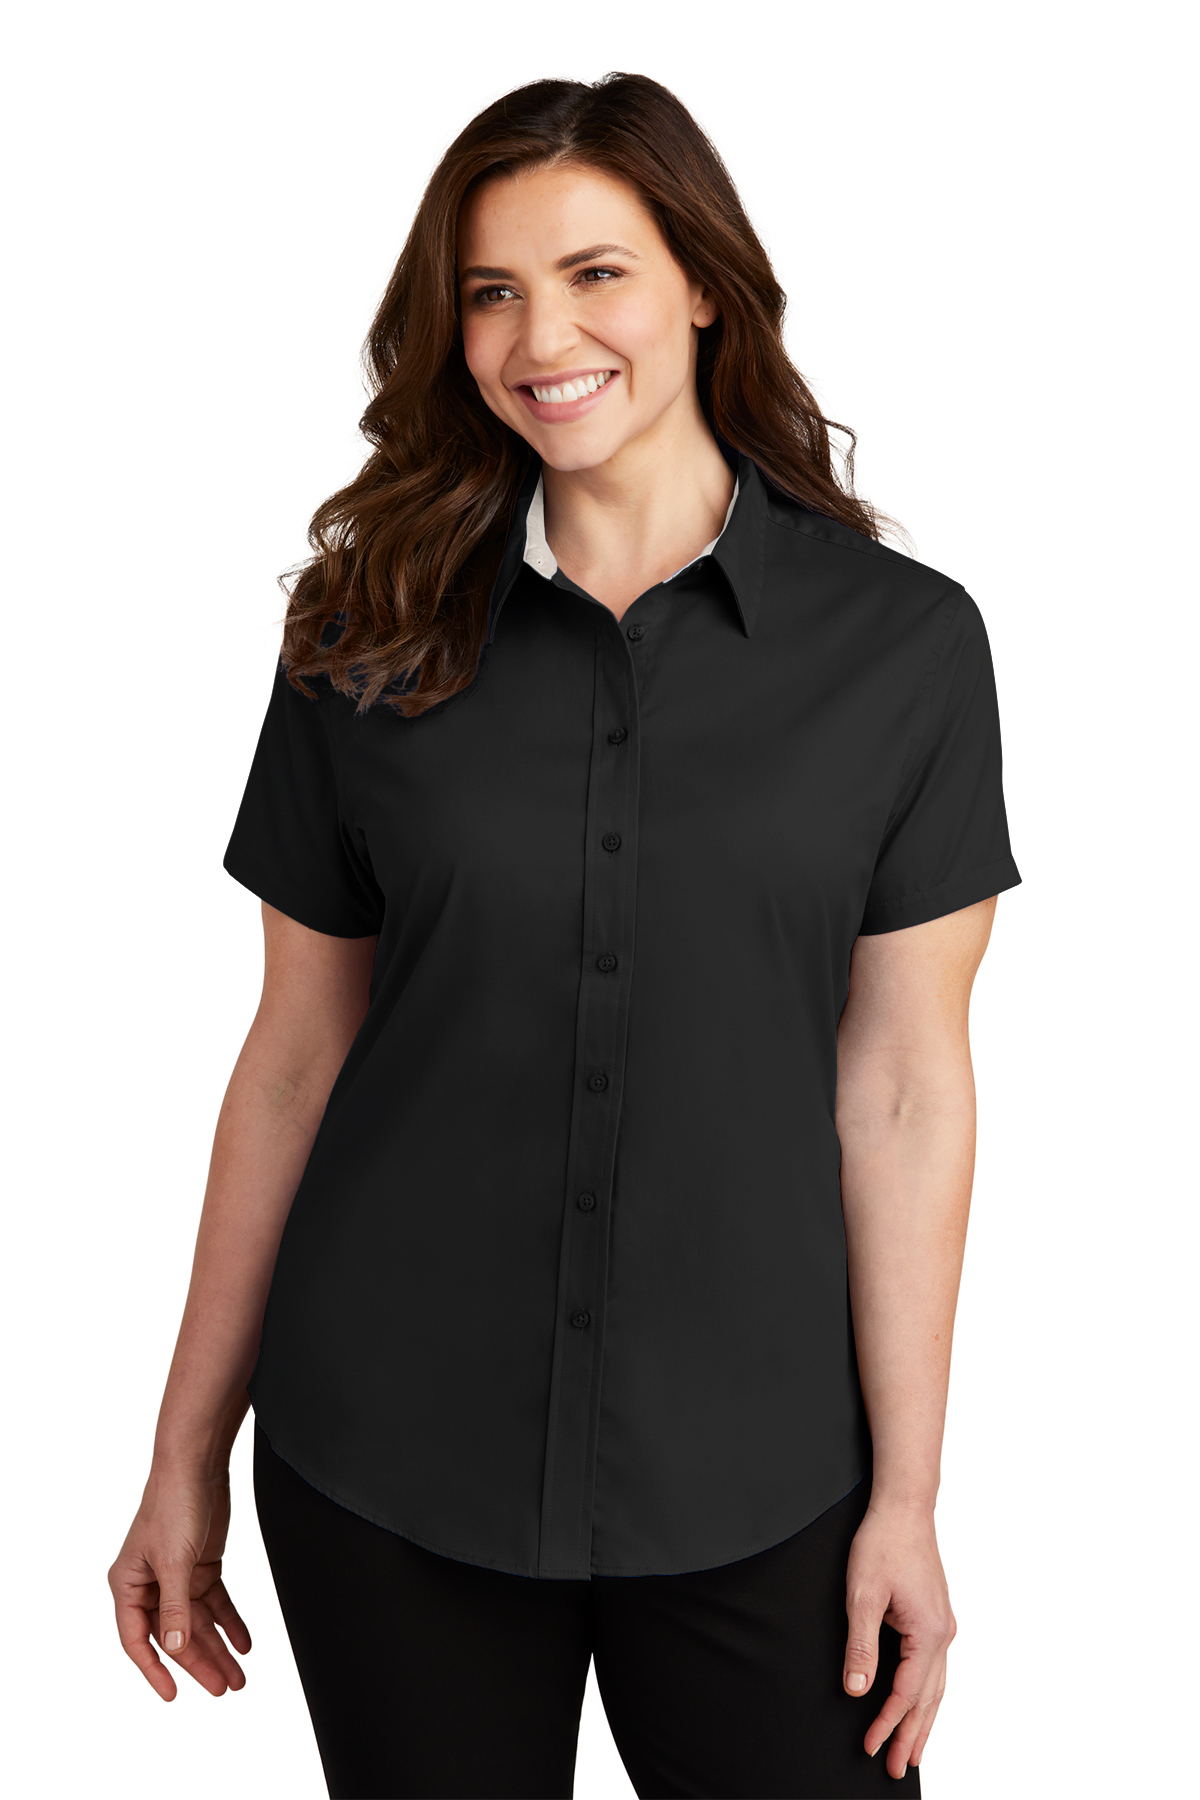 Ladies Shirt Easy Authority Port | Care | Product Port Short Sleeve Authority